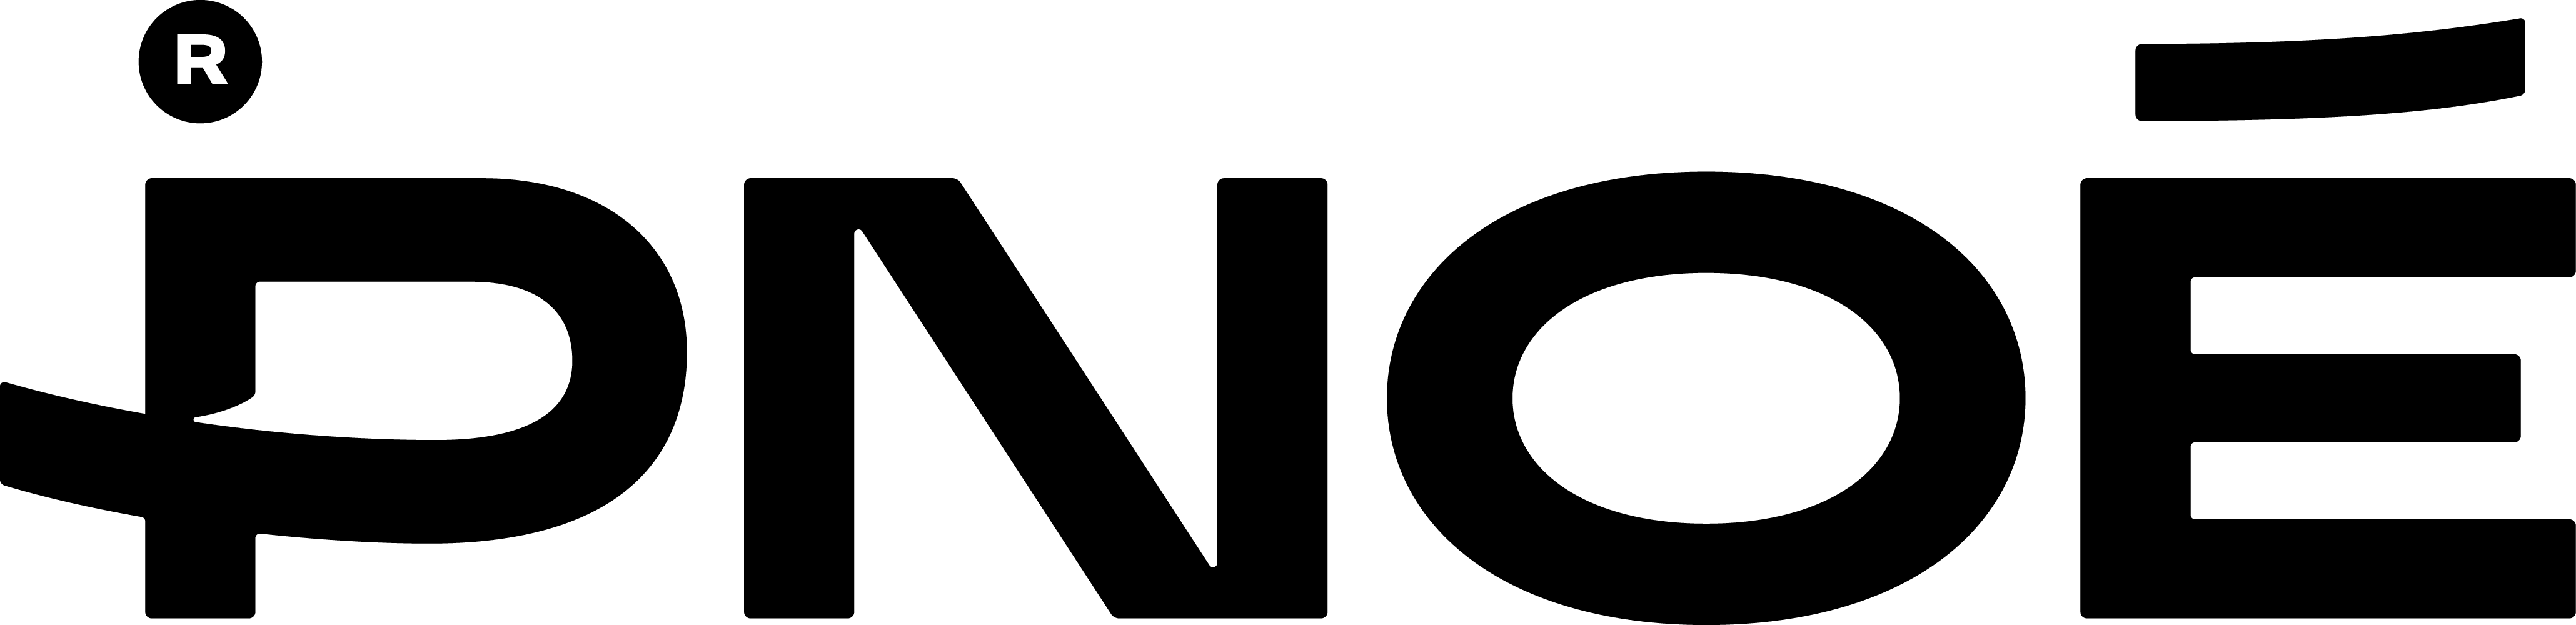 Pnoe Logo